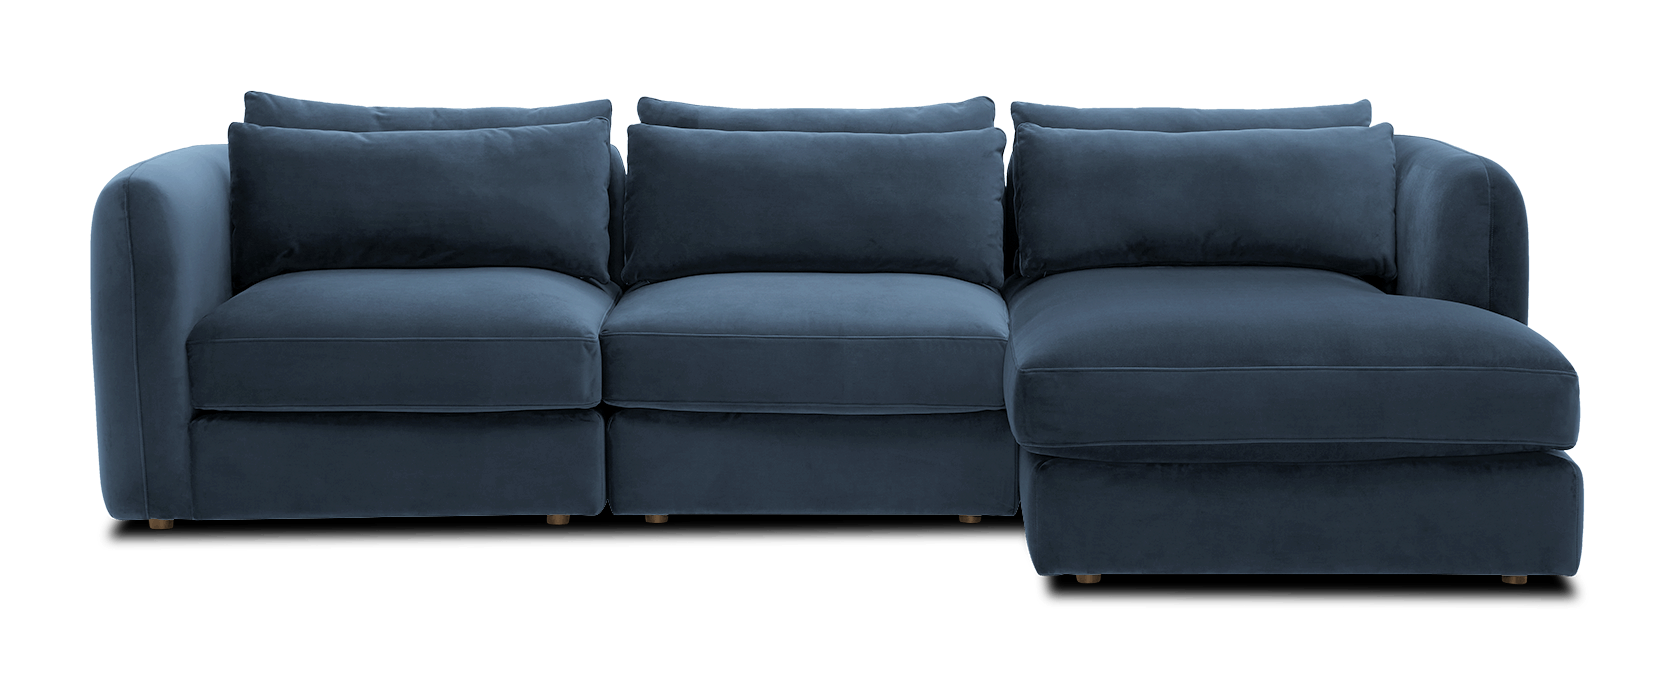 sebastian modular chaise sectional milo french blue